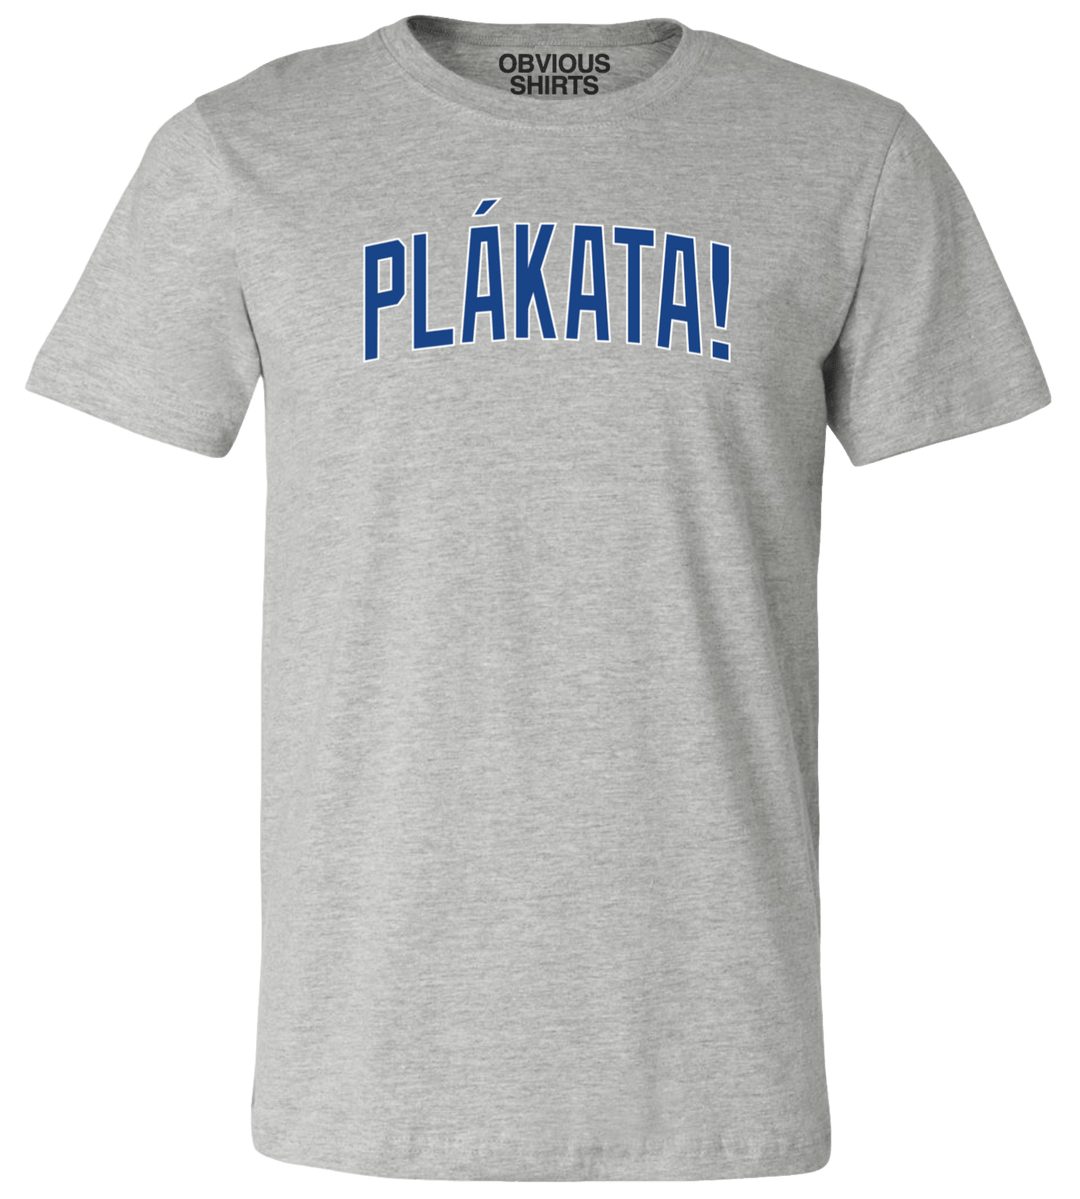 PLÁKATA! - OBVIOUS SHIRTS